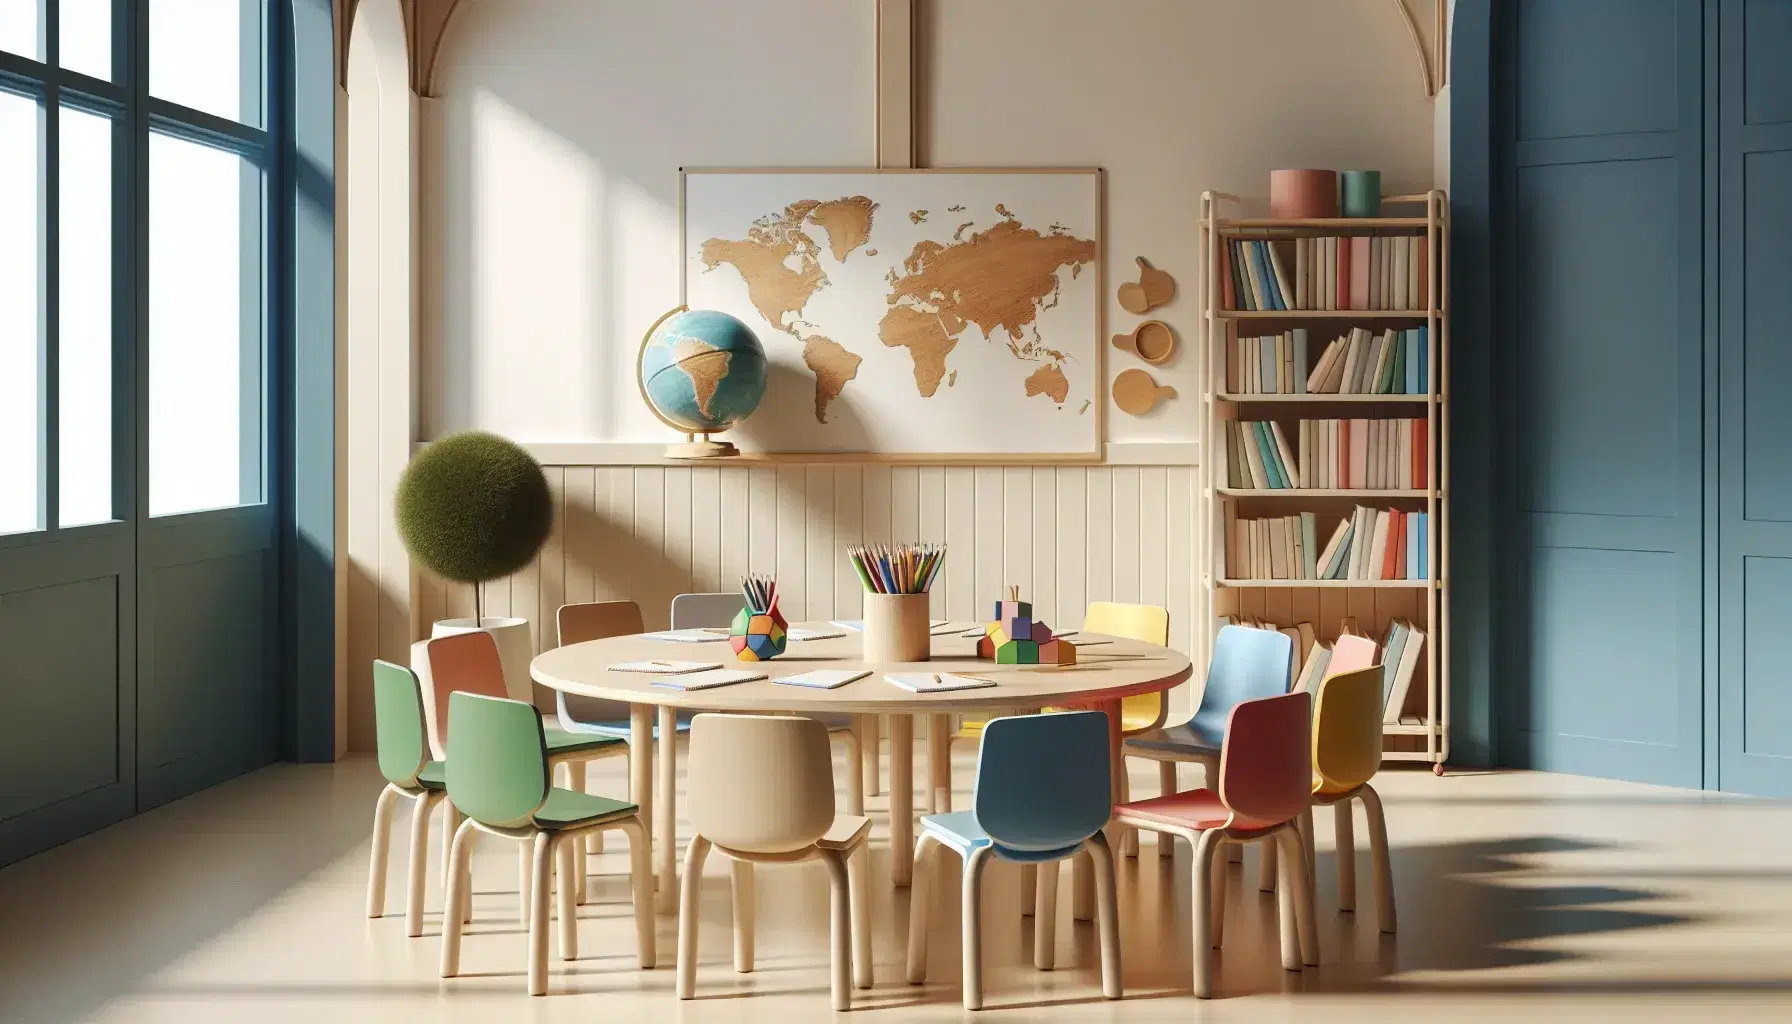 Aula luminosa con paredes color crema, mesa redonda de madera, sillas plásticas multicolores, útiles escolares, estantería con libros, pizarra blanca, planta y globo terráqueo.